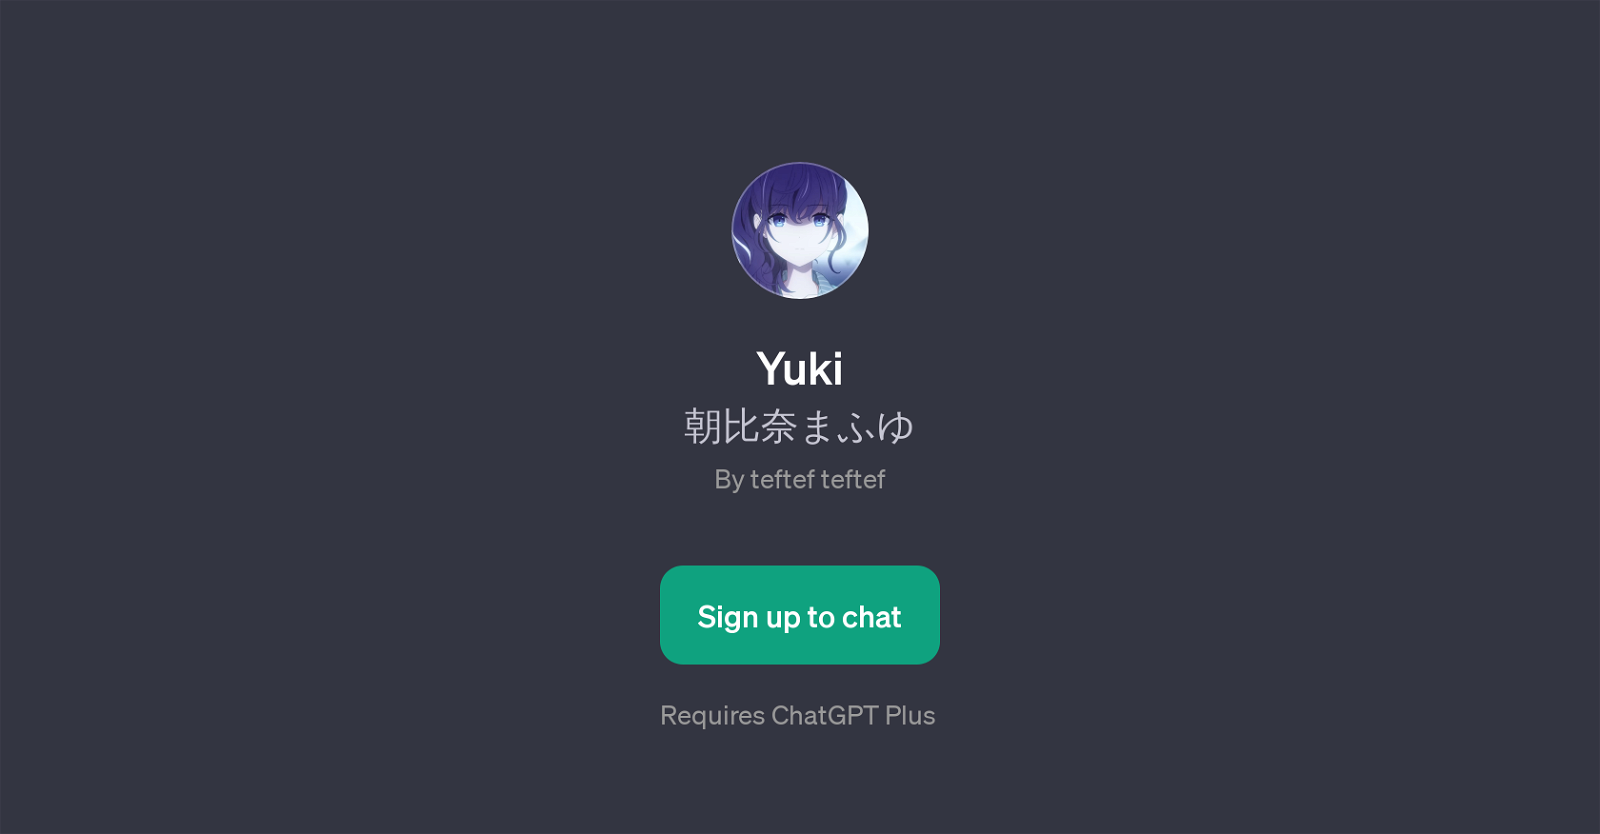 Yuki website